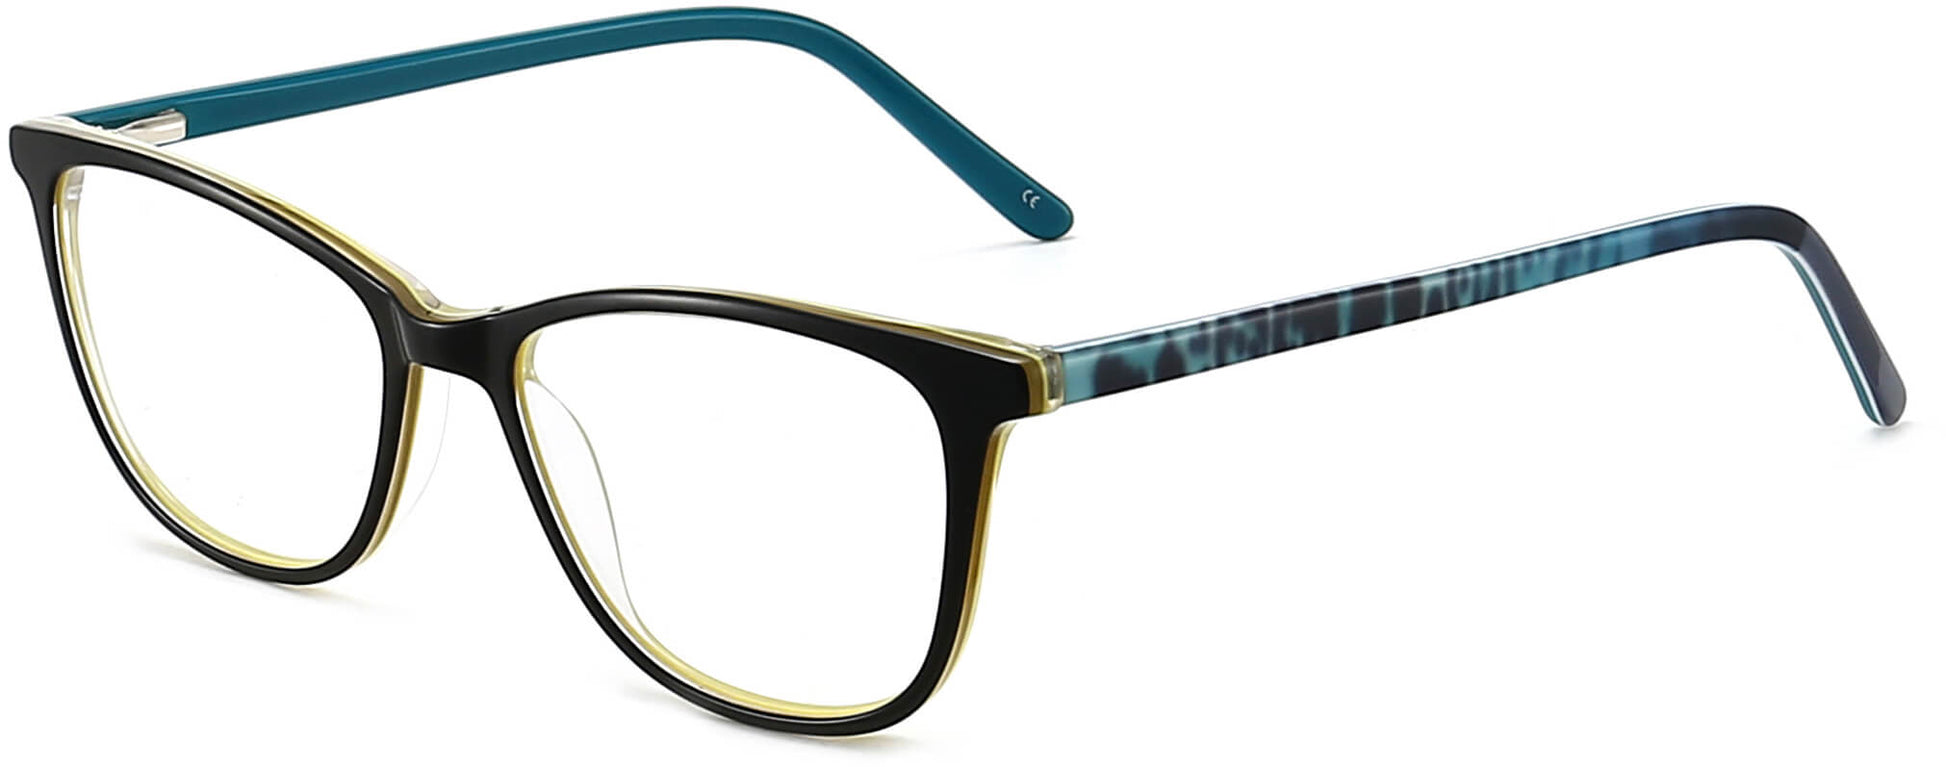 Raila cateye black&blue Eyeglasses from ANRRI, angle view